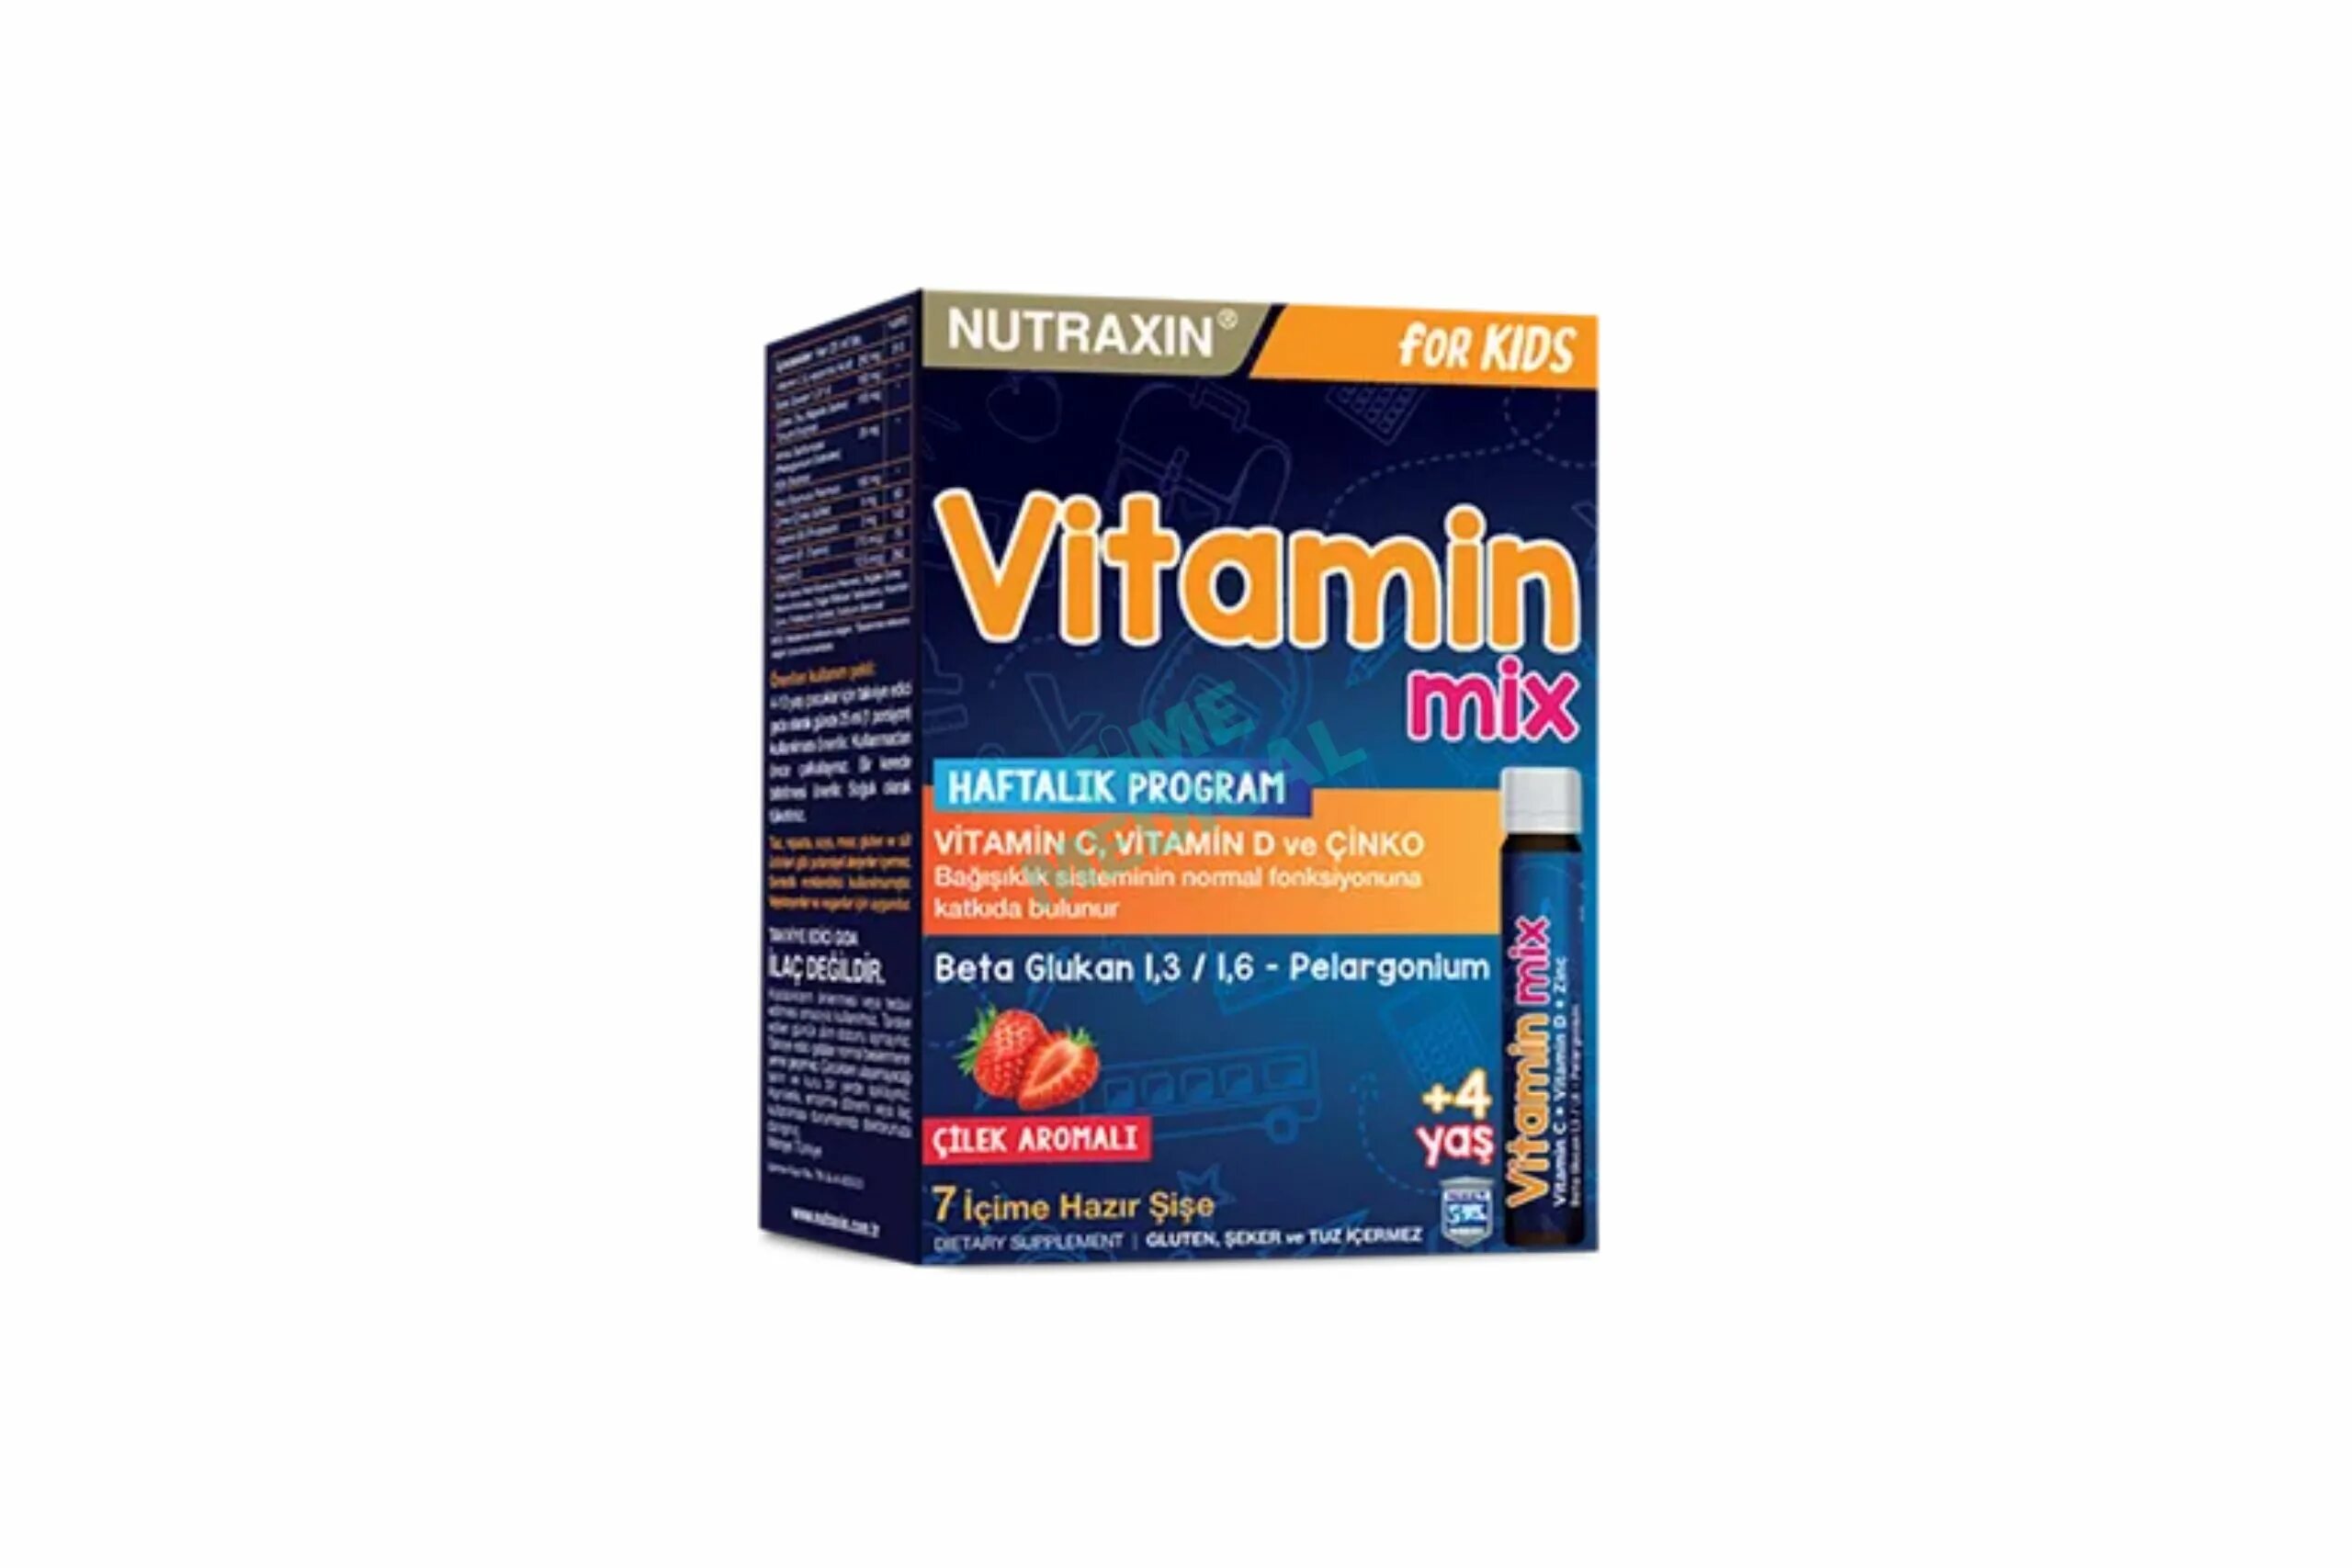 Vitamin mix. Nutraxin Vitamin Mix. Nutraxin витамины турецкие. Vitamin Mix Nutraxin Турция. Витамин д3 Nutraxin турецкий.